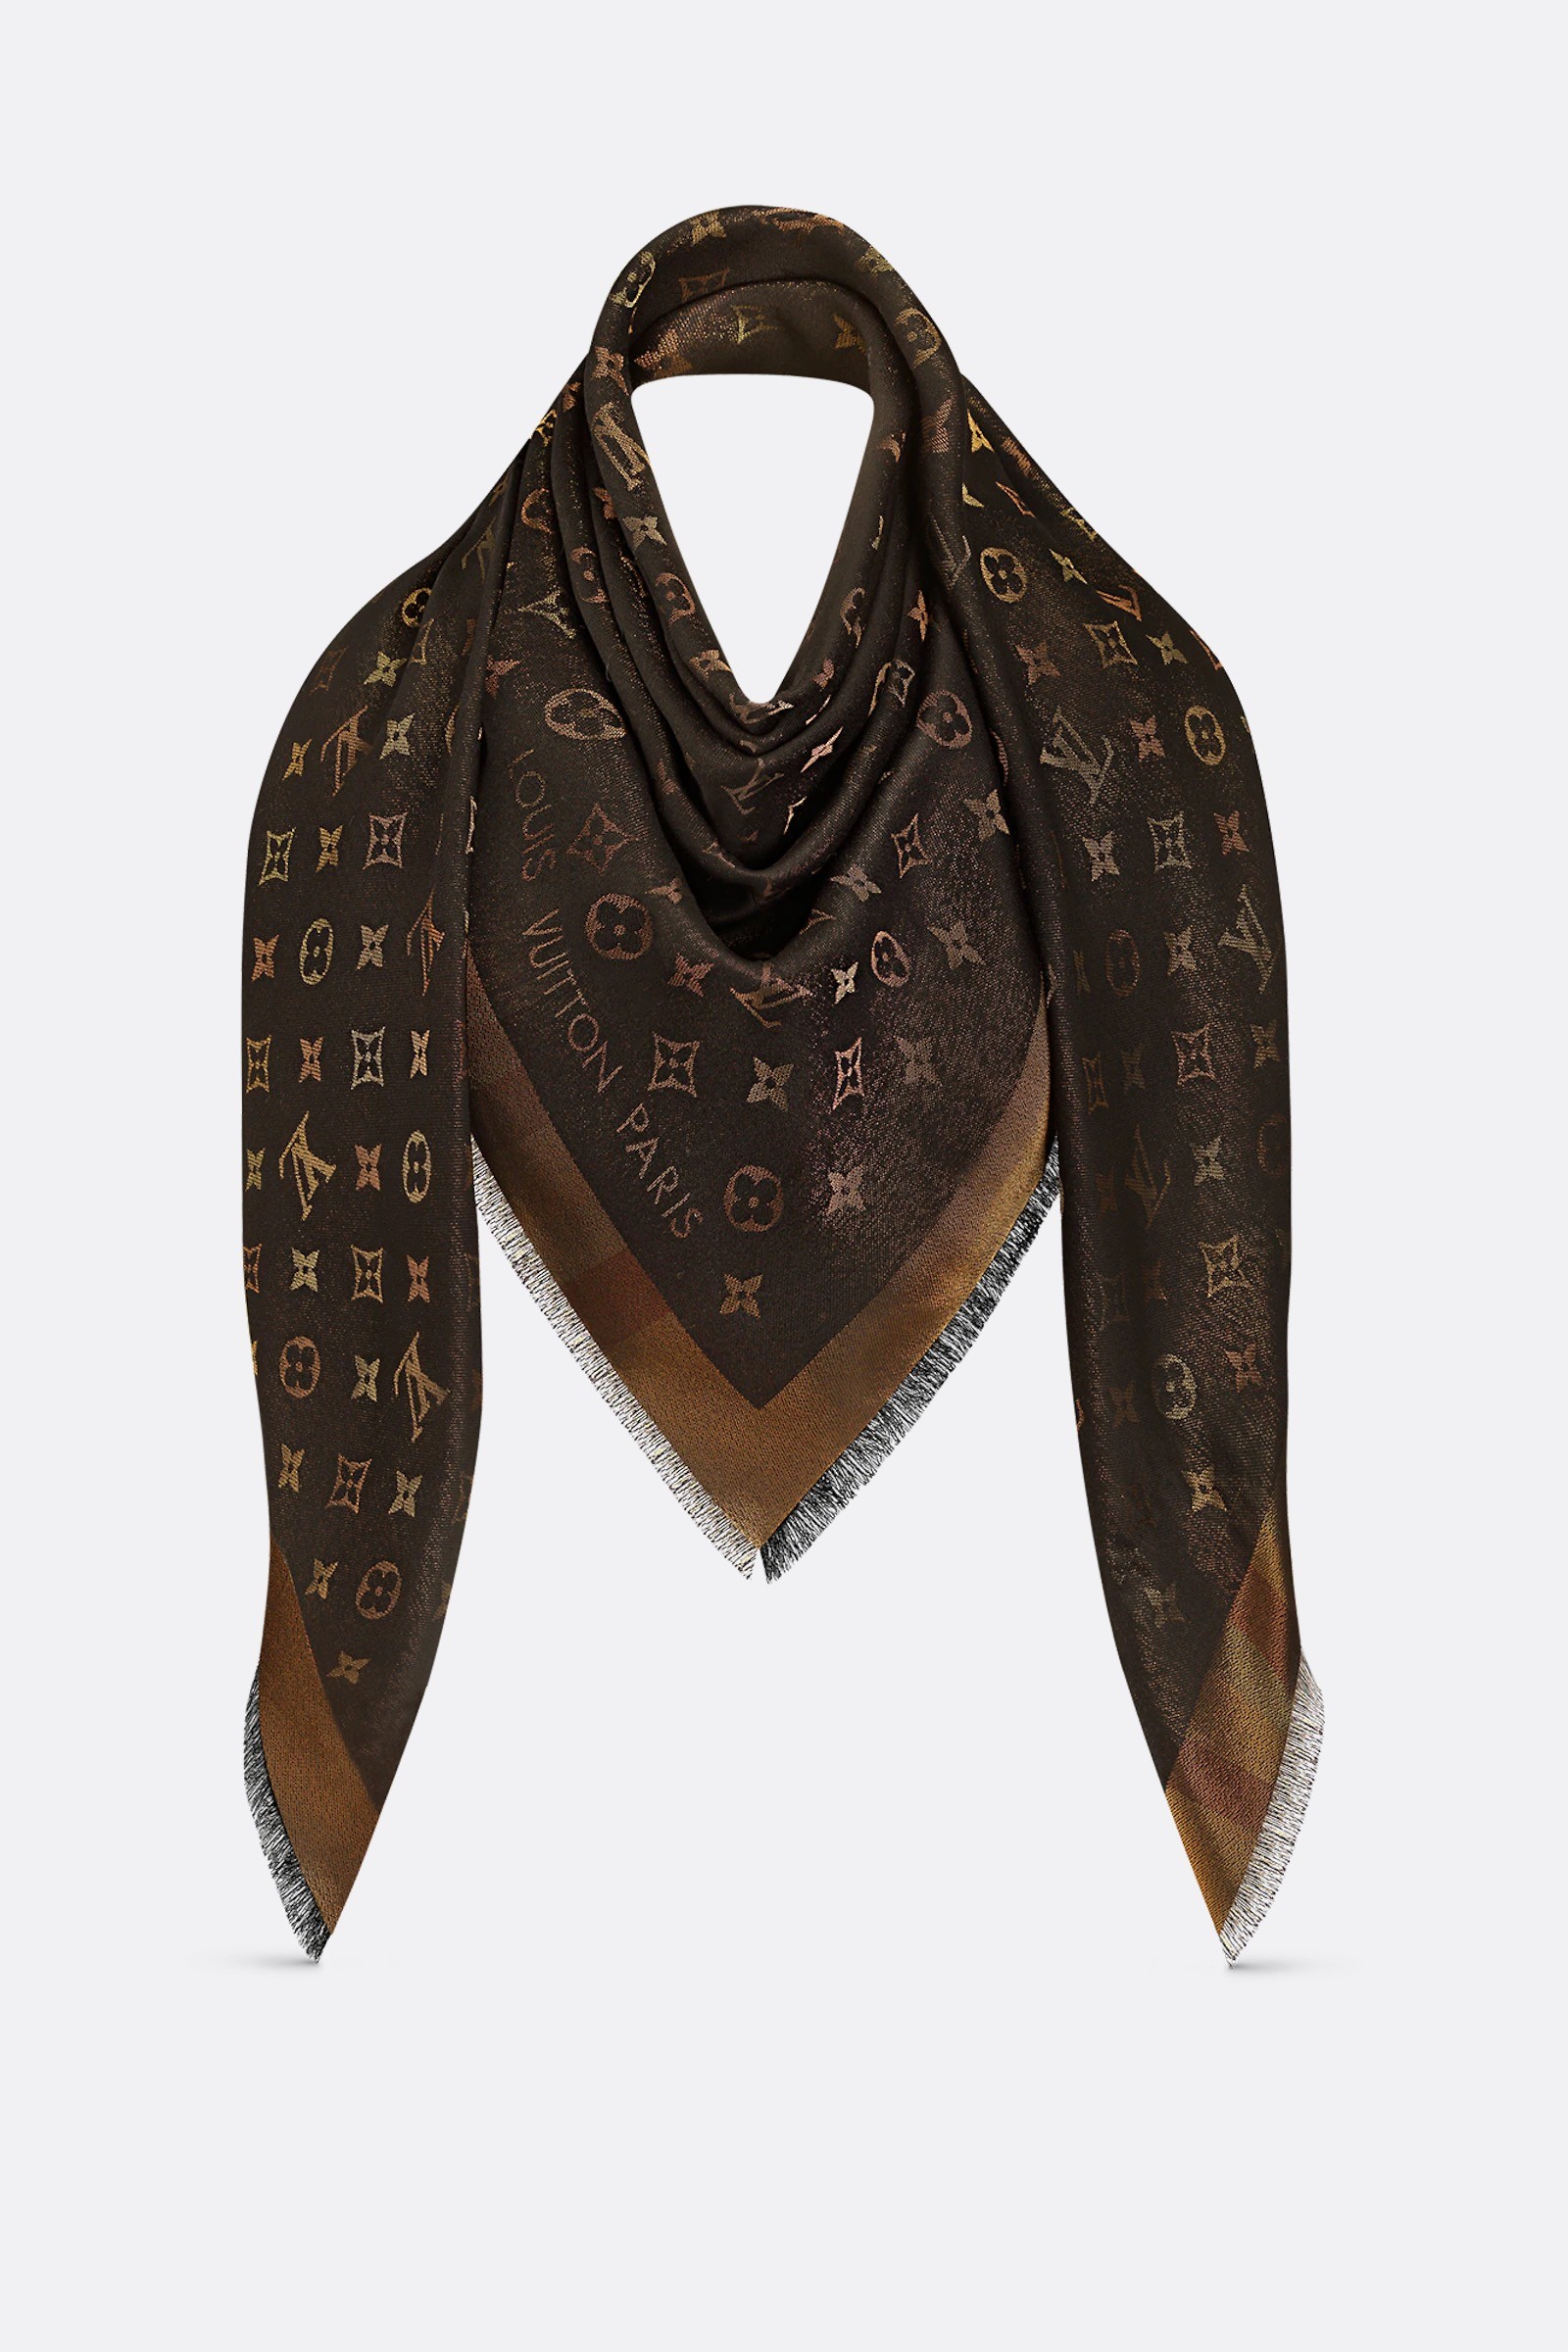 Louis Vuitton So Shine Monogram Shawl Brown Silk